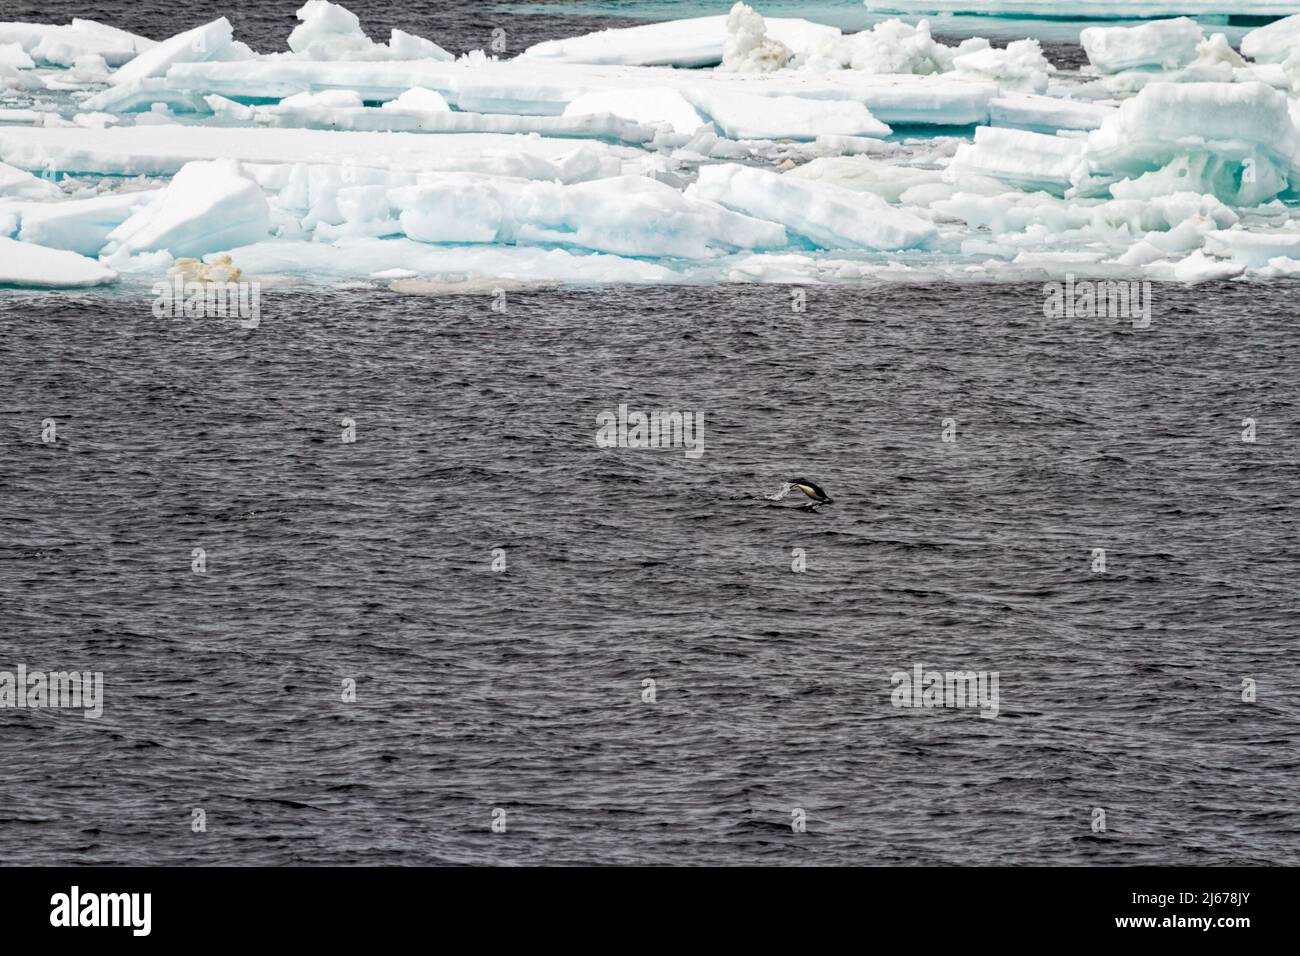 Antarctica - Colony Of Penguins In Natural Habitat - Antarctica Wildlife Expedition Stock Photo